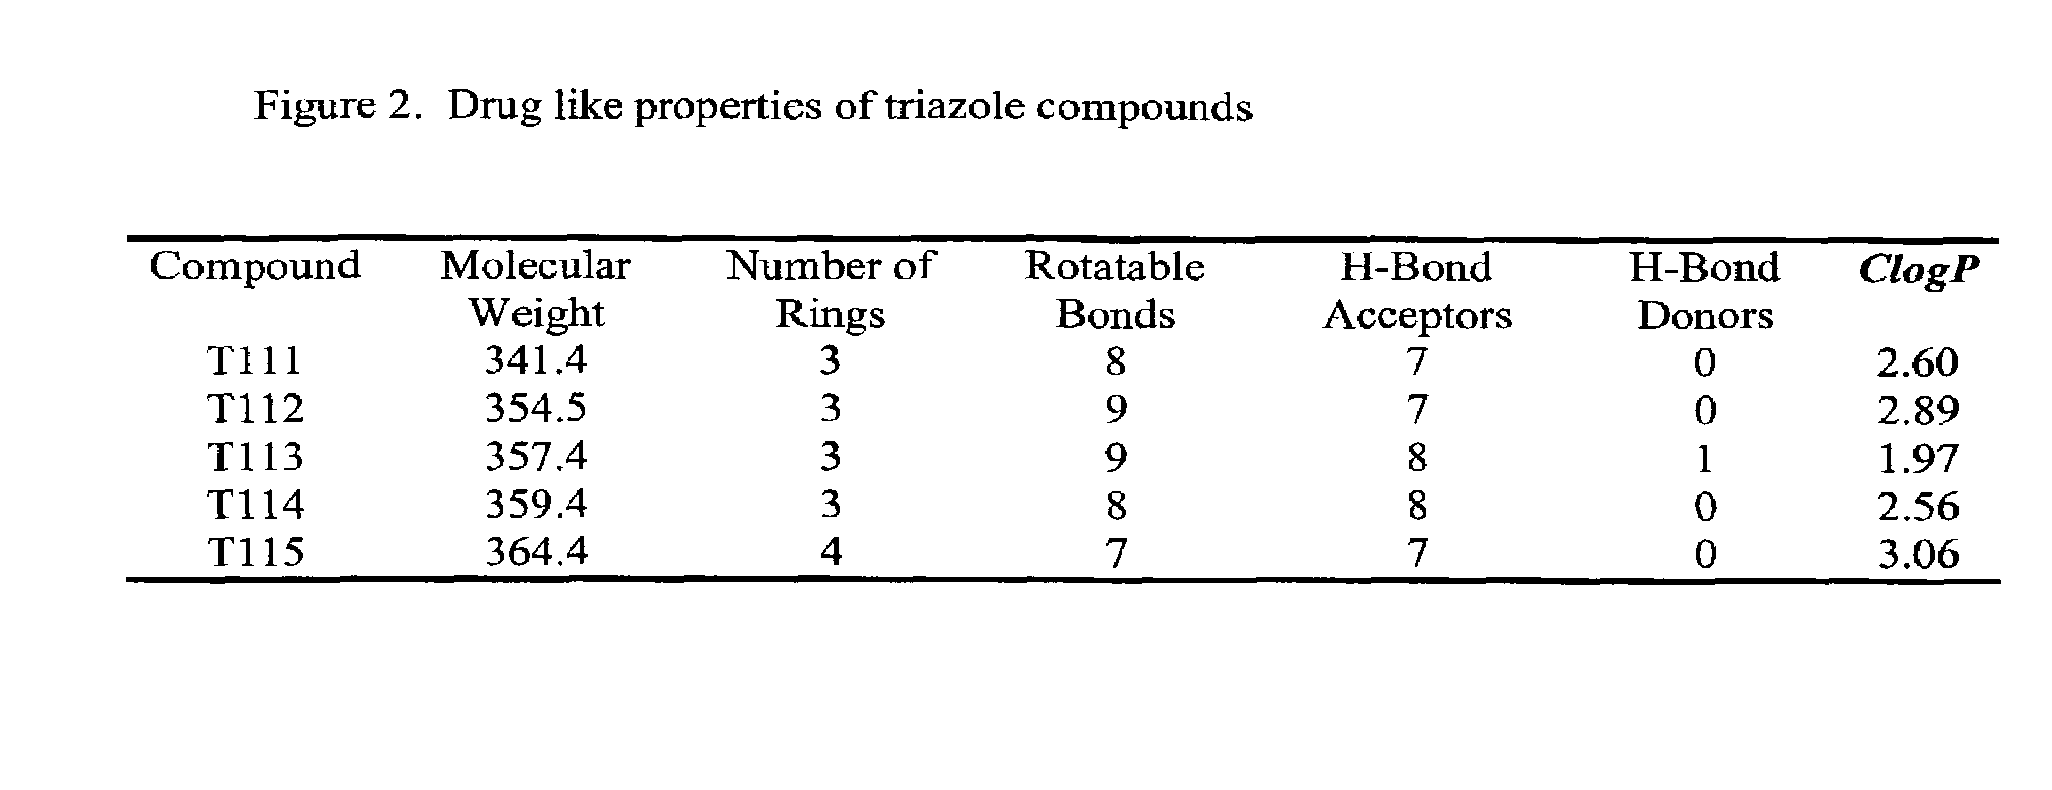 Anti-mitotic anti-proliferative compounds